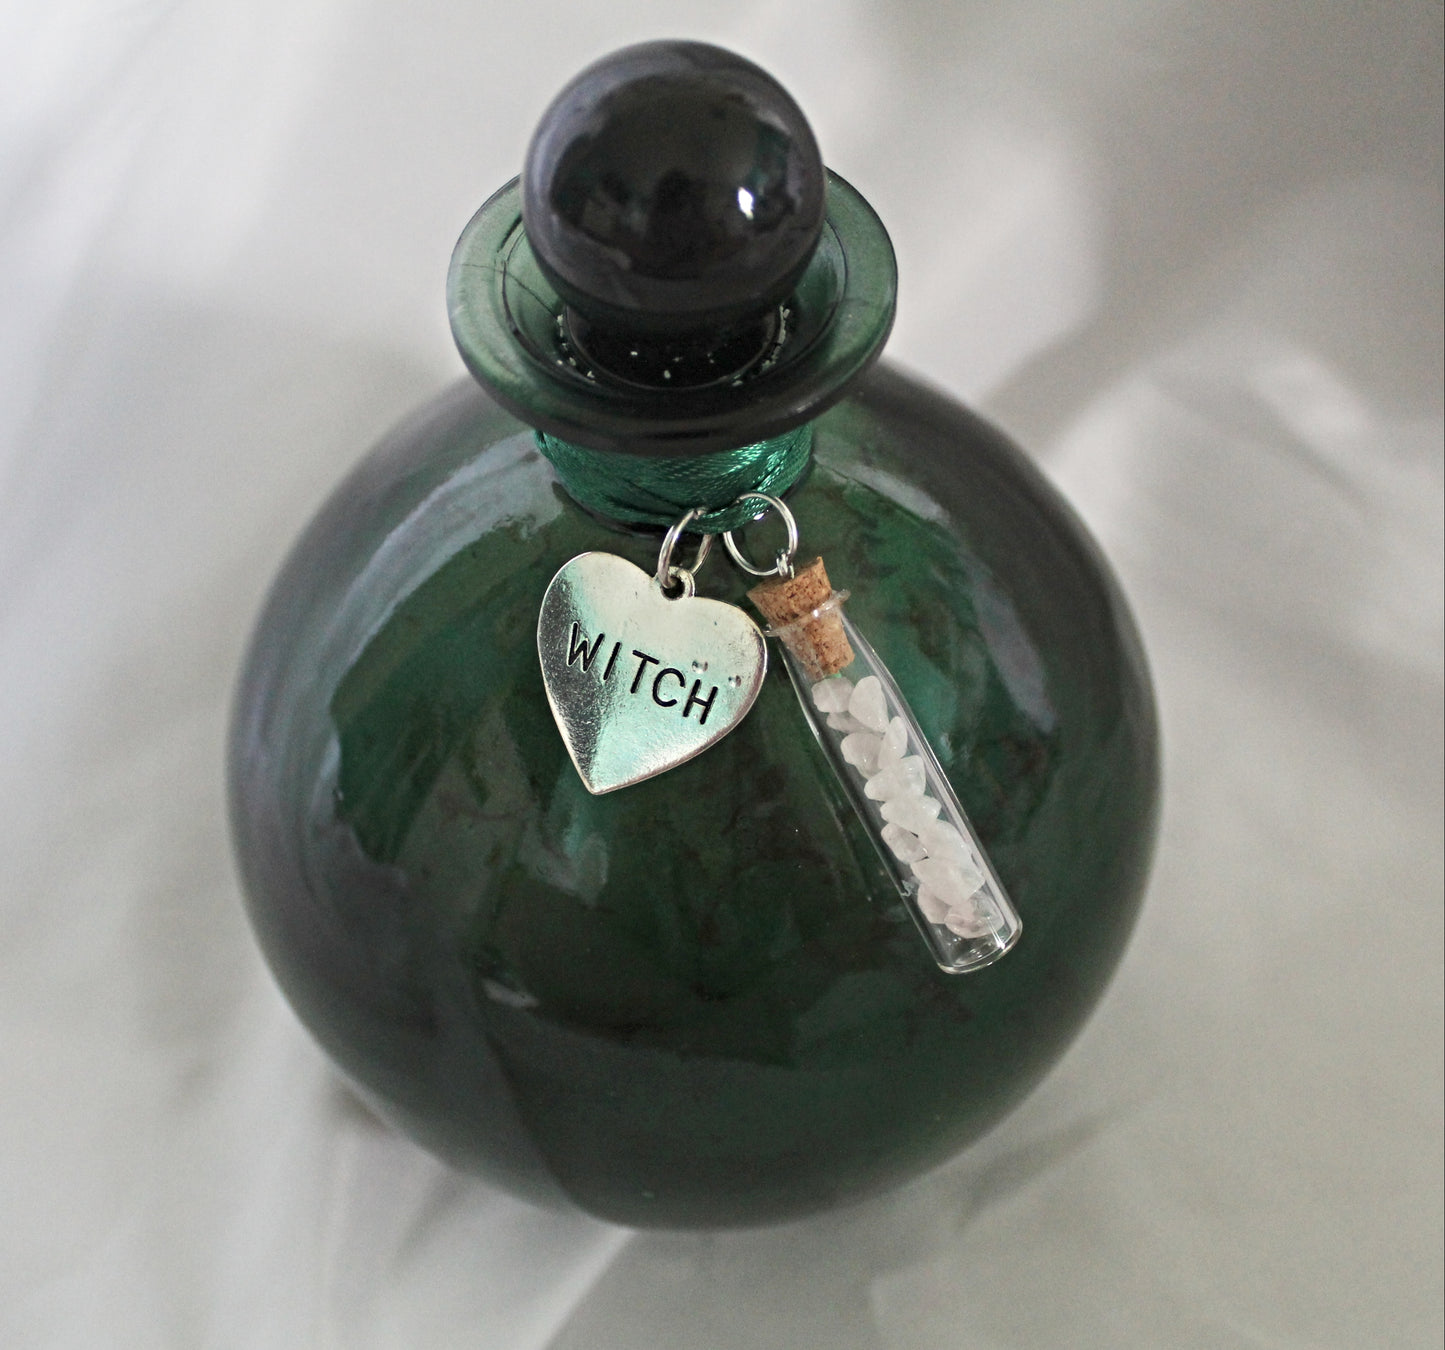 Potion Bottle Bath Salts Featuring Witch Charm and Rose Quartz Charm